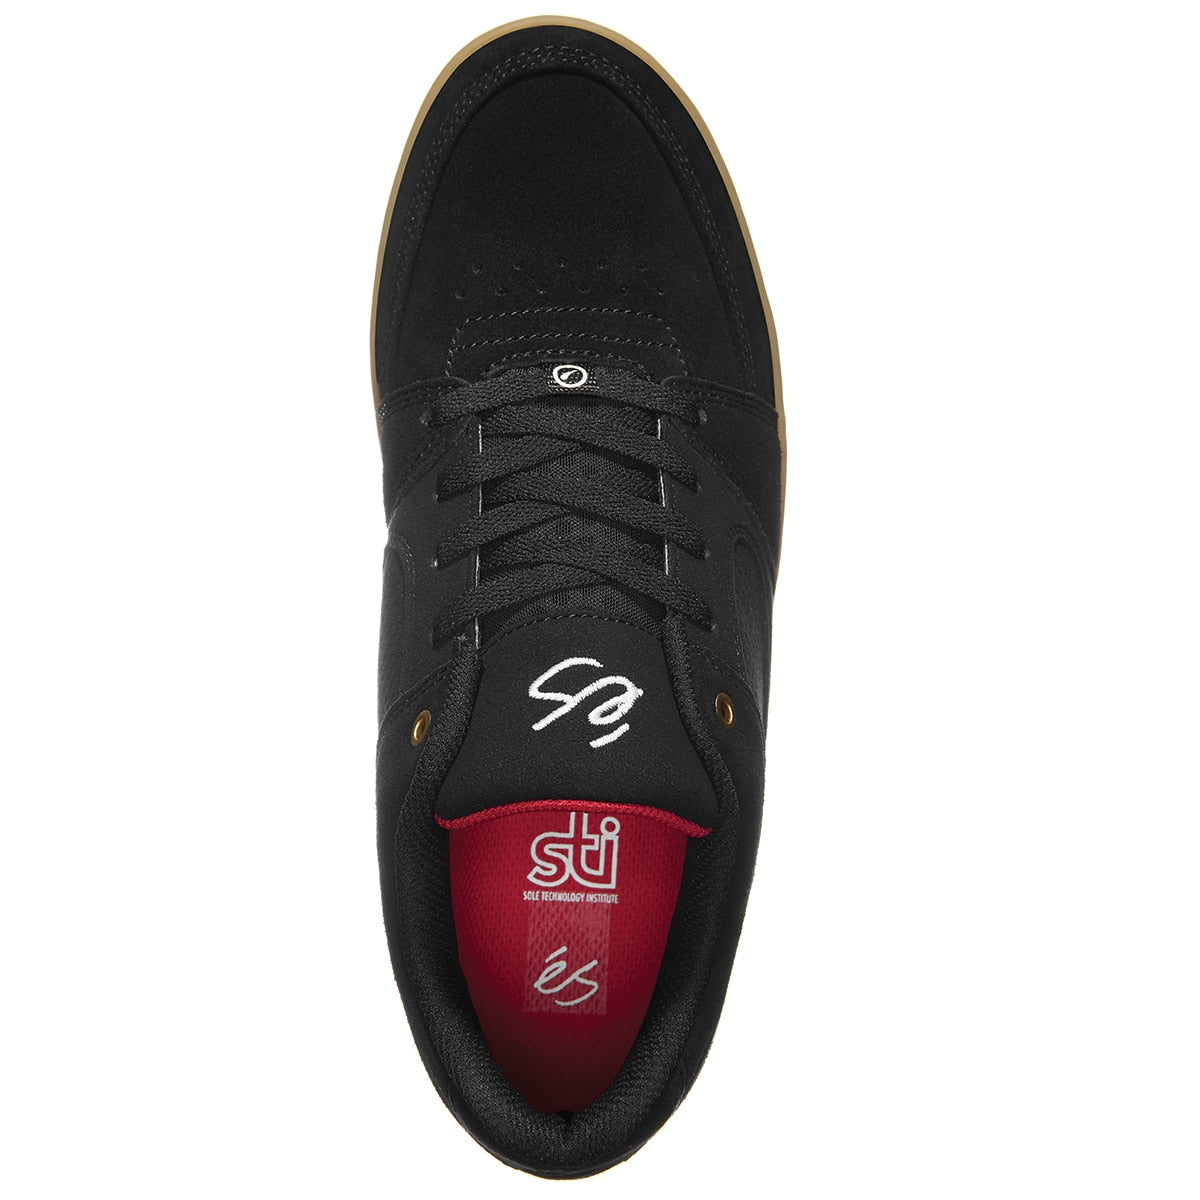 eS Accel Slim Skateboard Shoe - Black/Gum